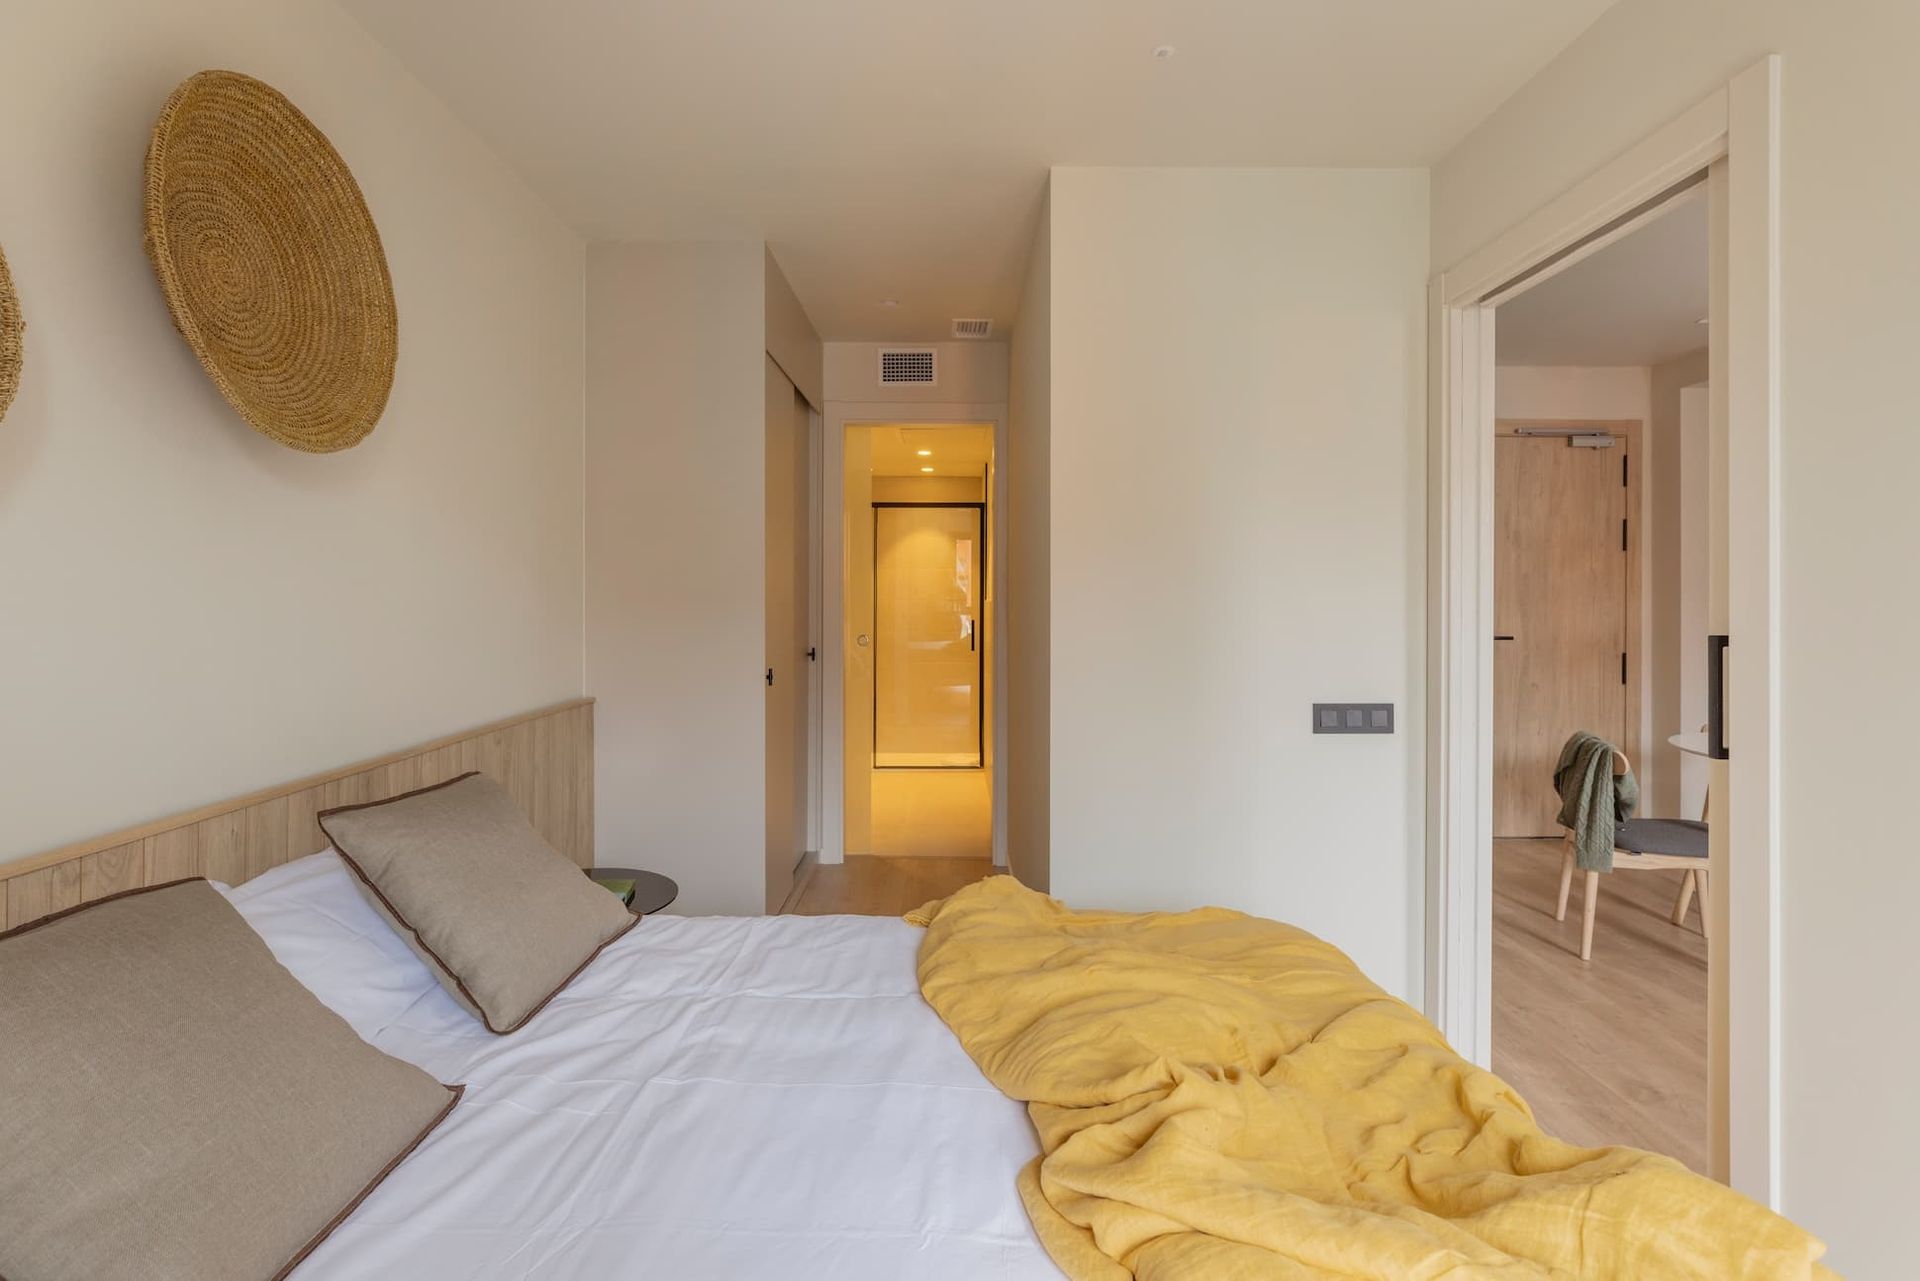 1 bedroom apartment in Barcelona Sant Antoni (pax 2)